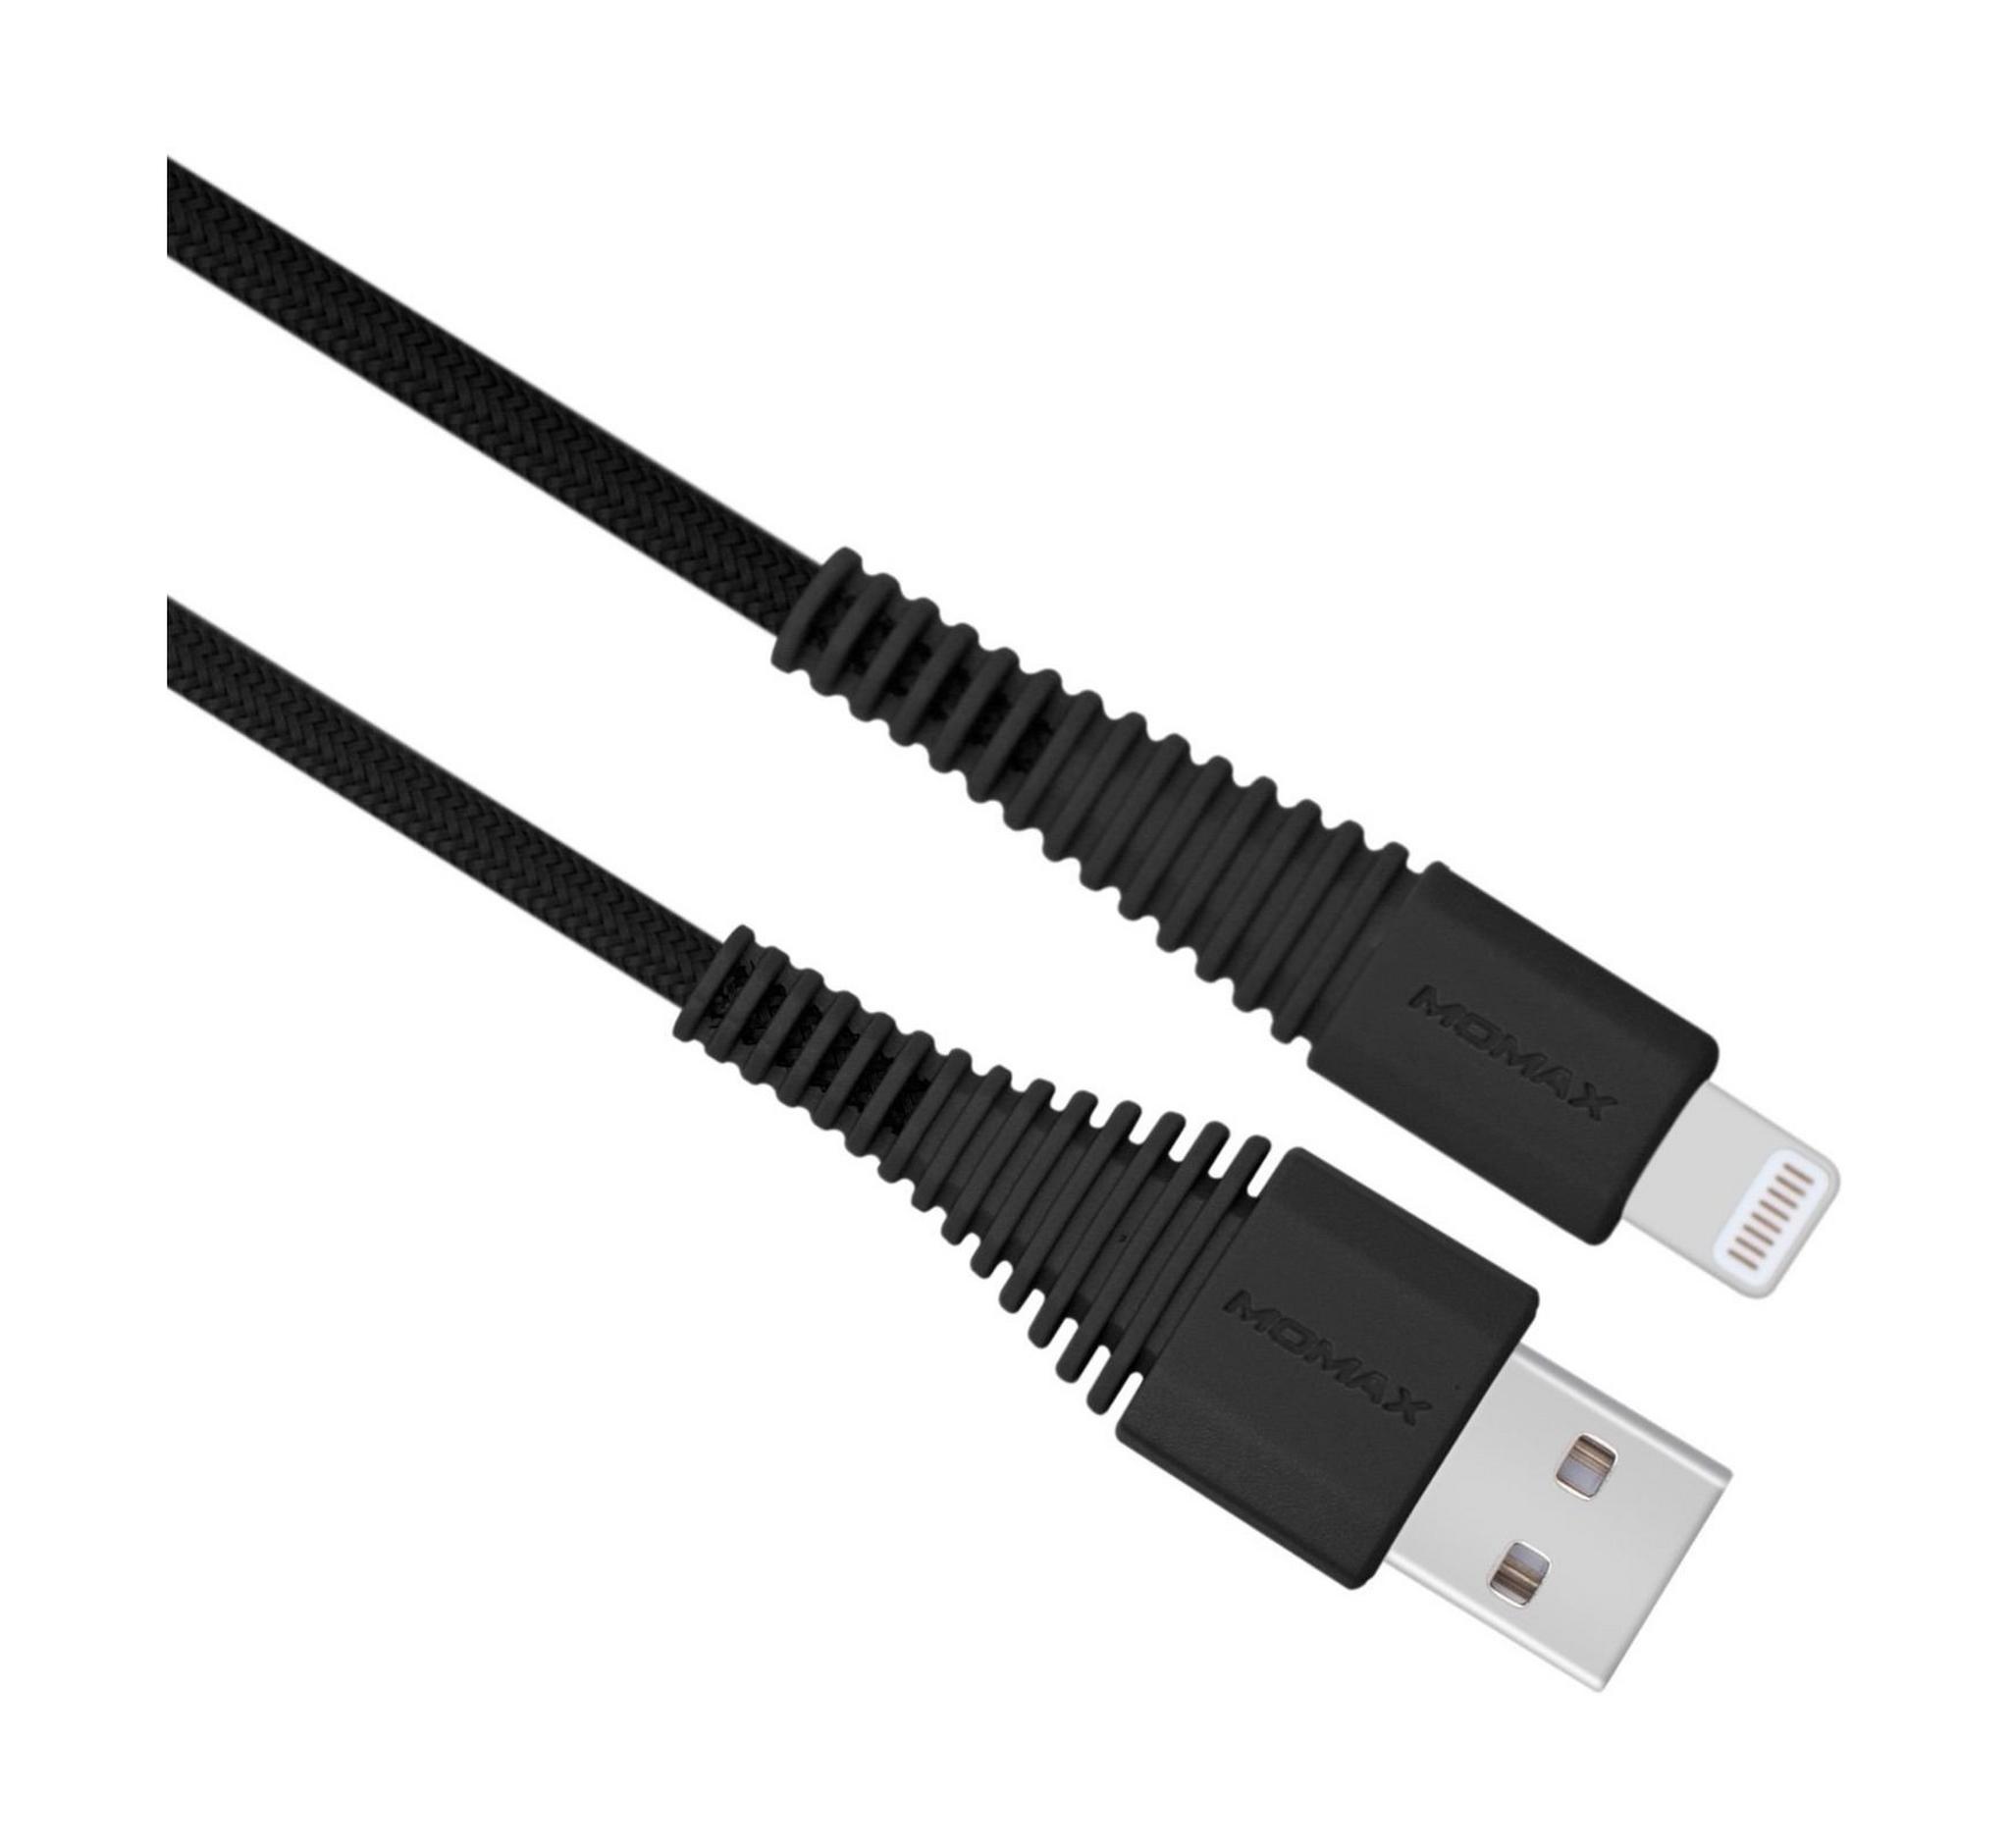 Momax Tough Link Lightning Cable 1-Meter (DL8D) - Black | Connector ...